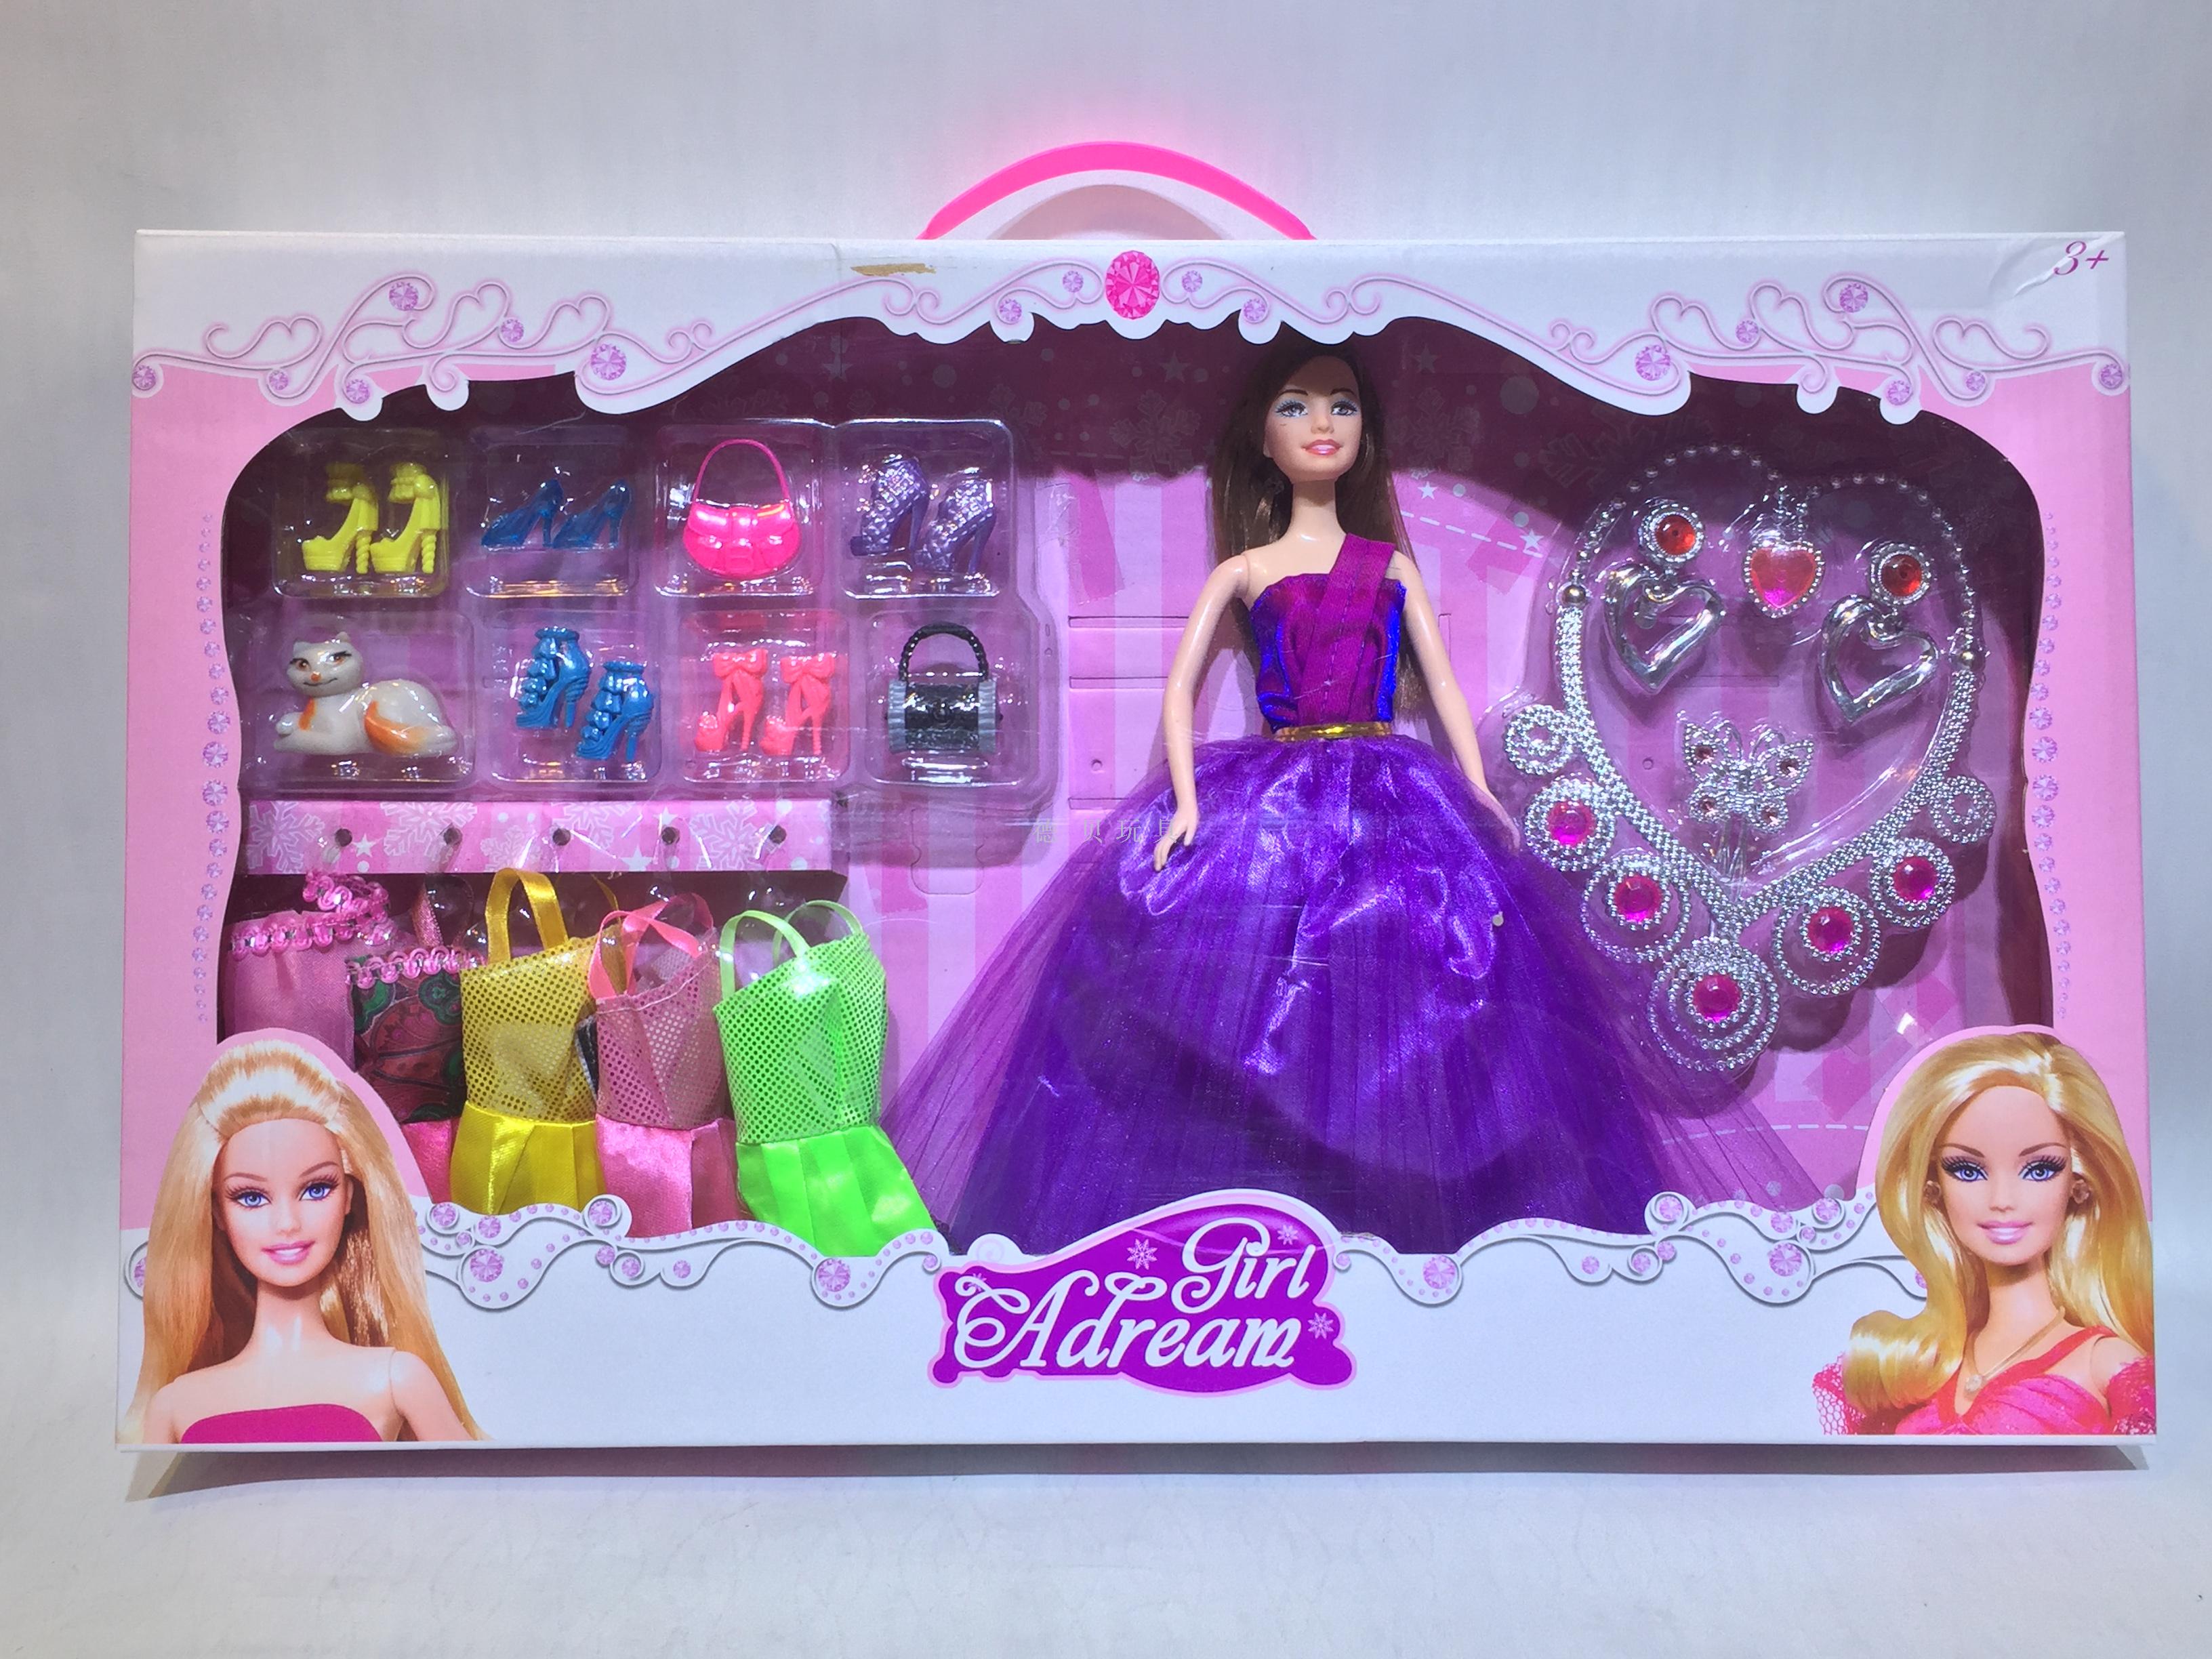 barbie box set